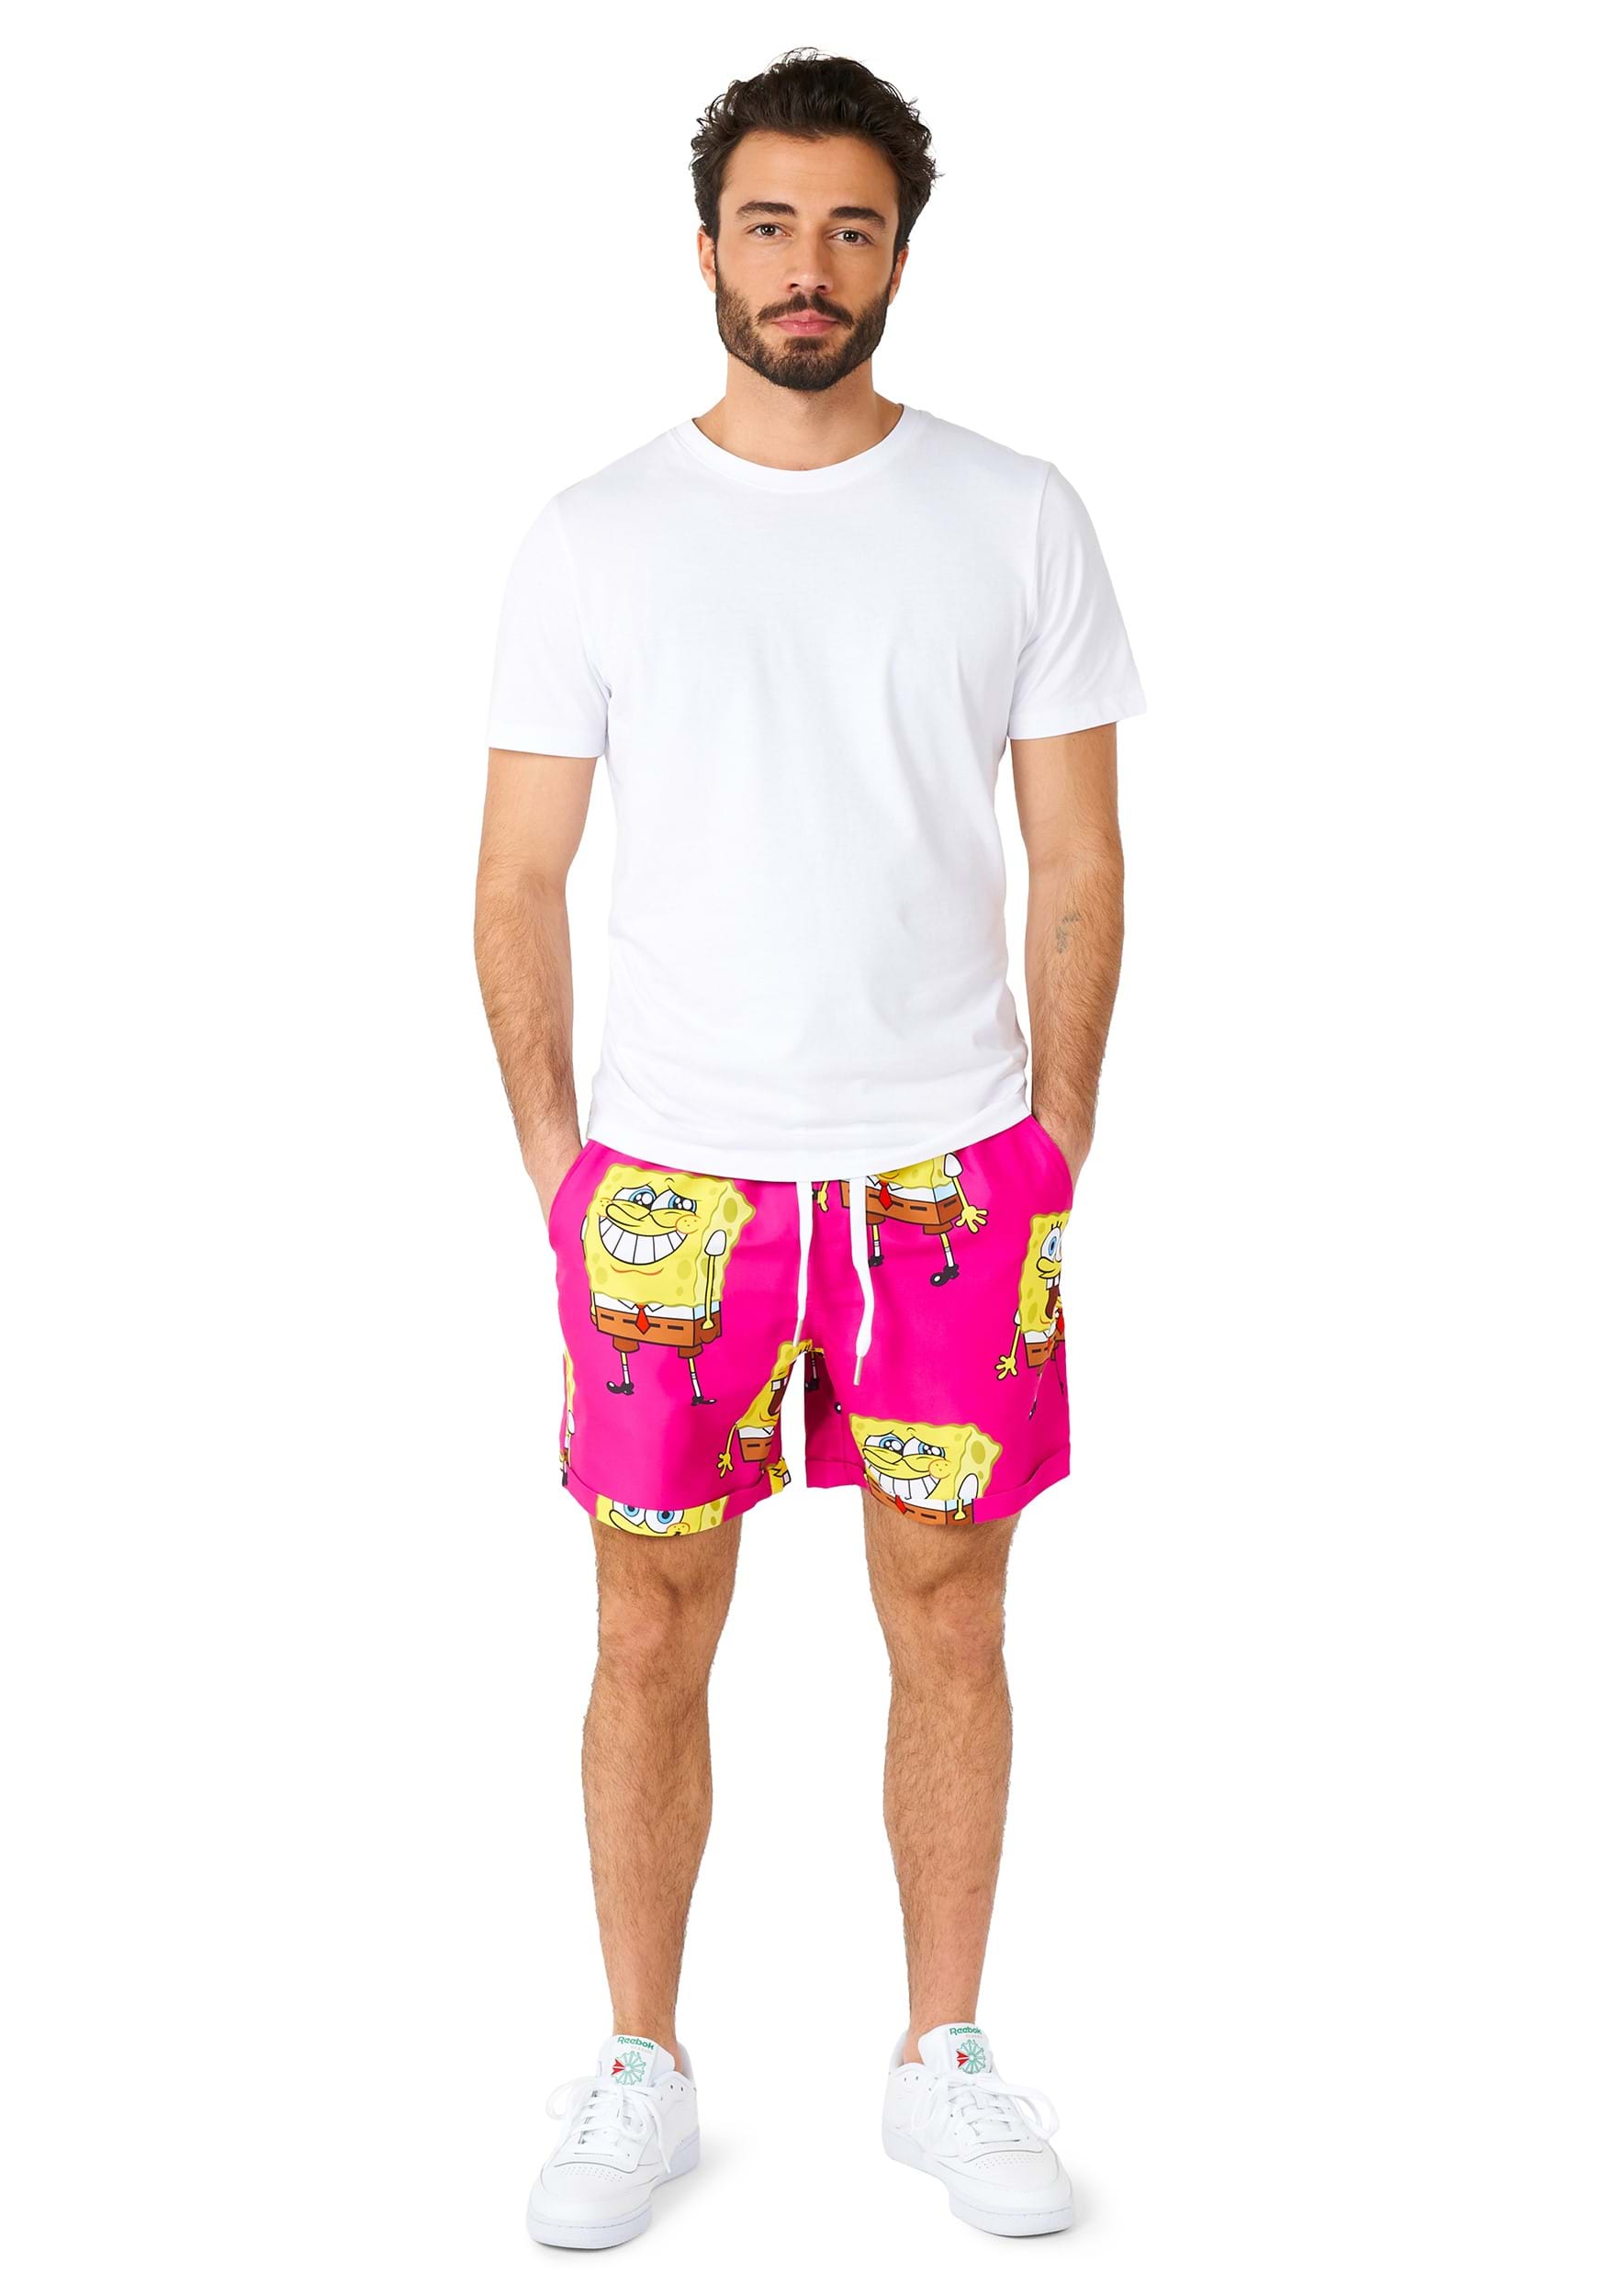 Spongebob Squarepants Swimsuit & Shirt